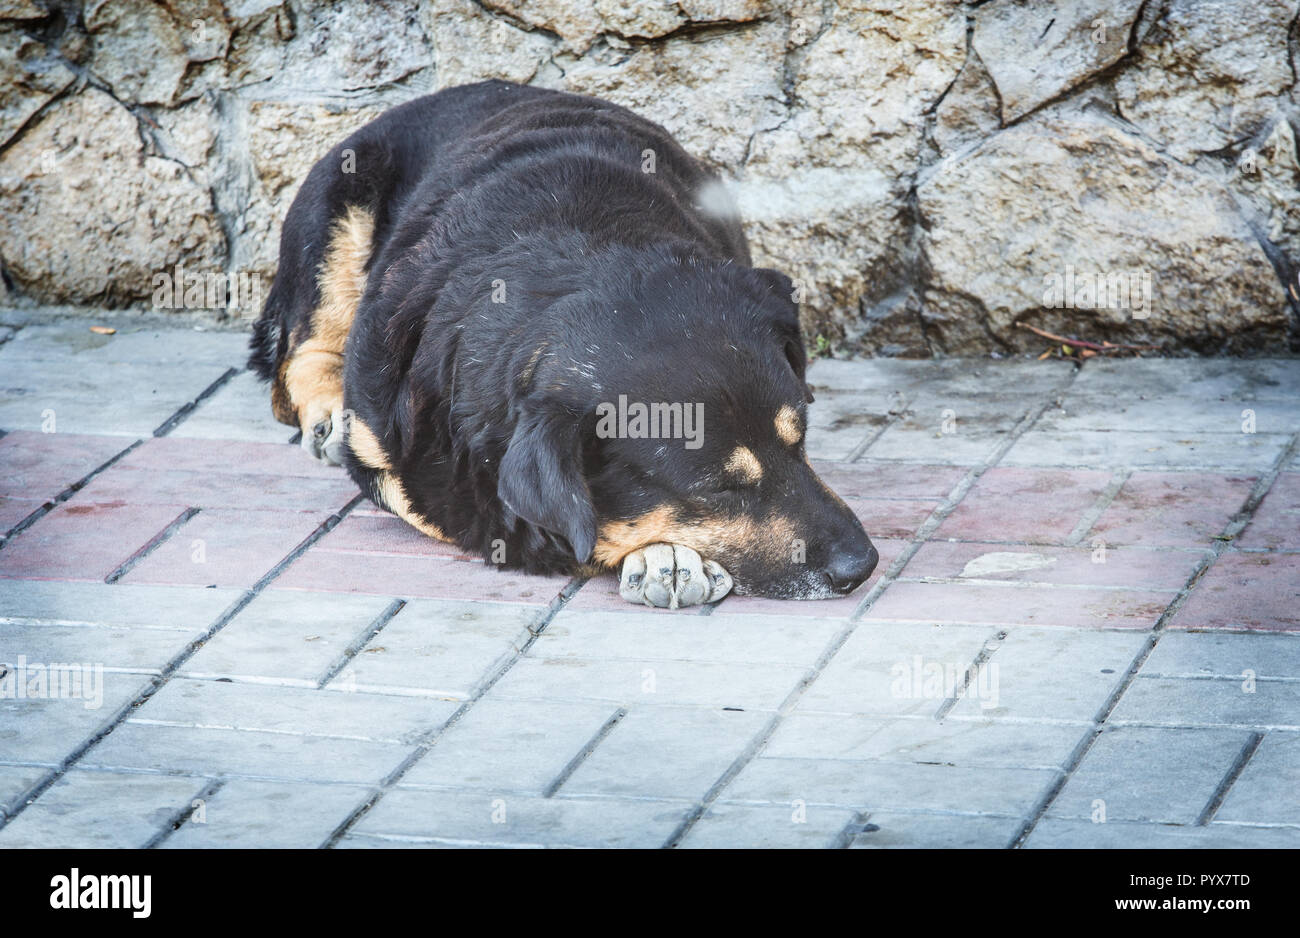 A homeless dog lies and sleeps on the pavement. Closeup Stock Photo